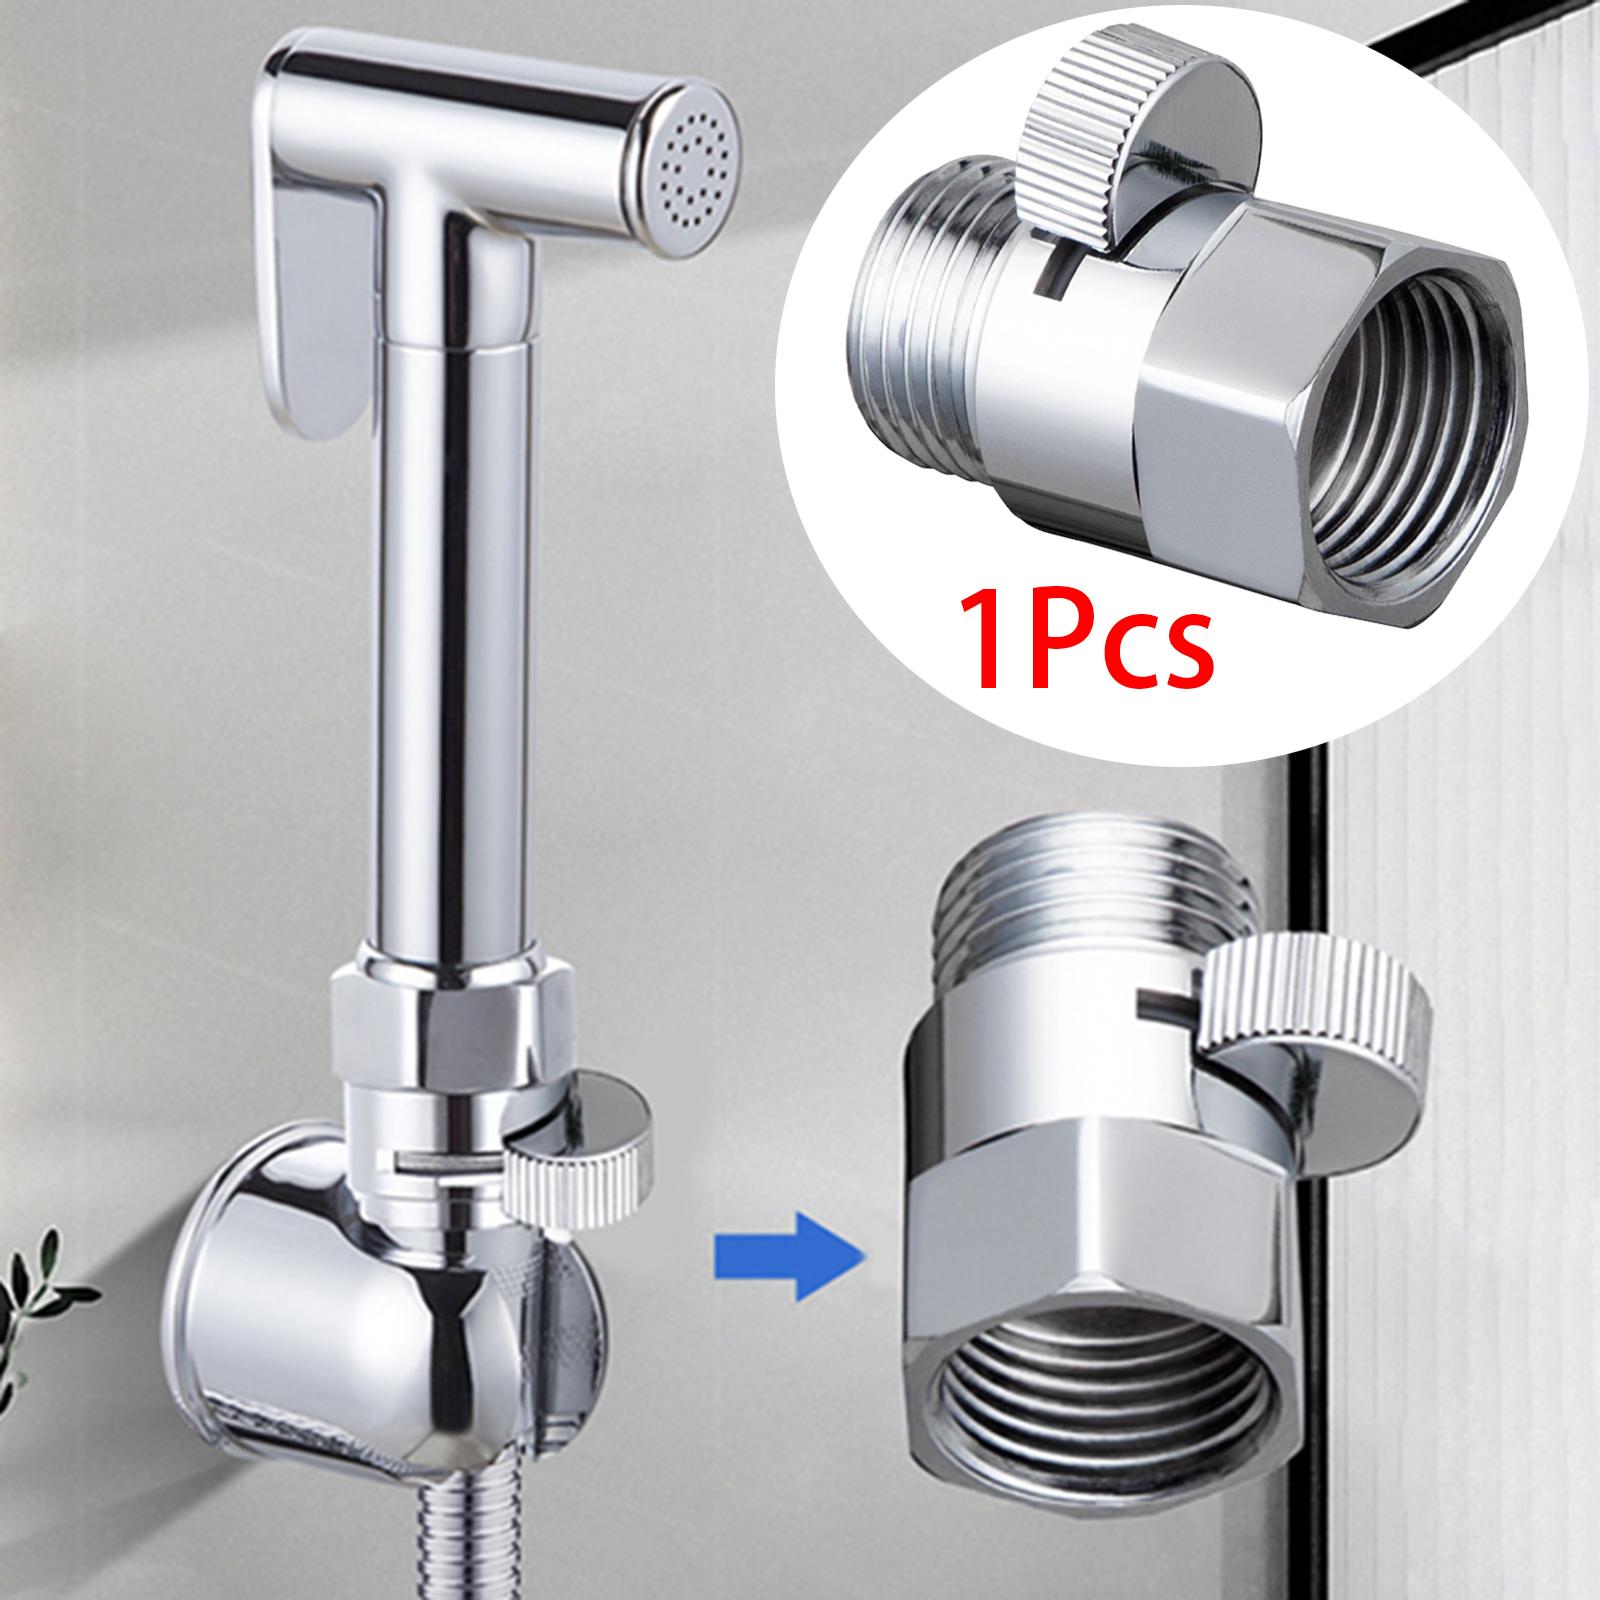 Shower Head Flow Control Valve Adapter Bathroom Fixtures G1/2 Shut-off Valve